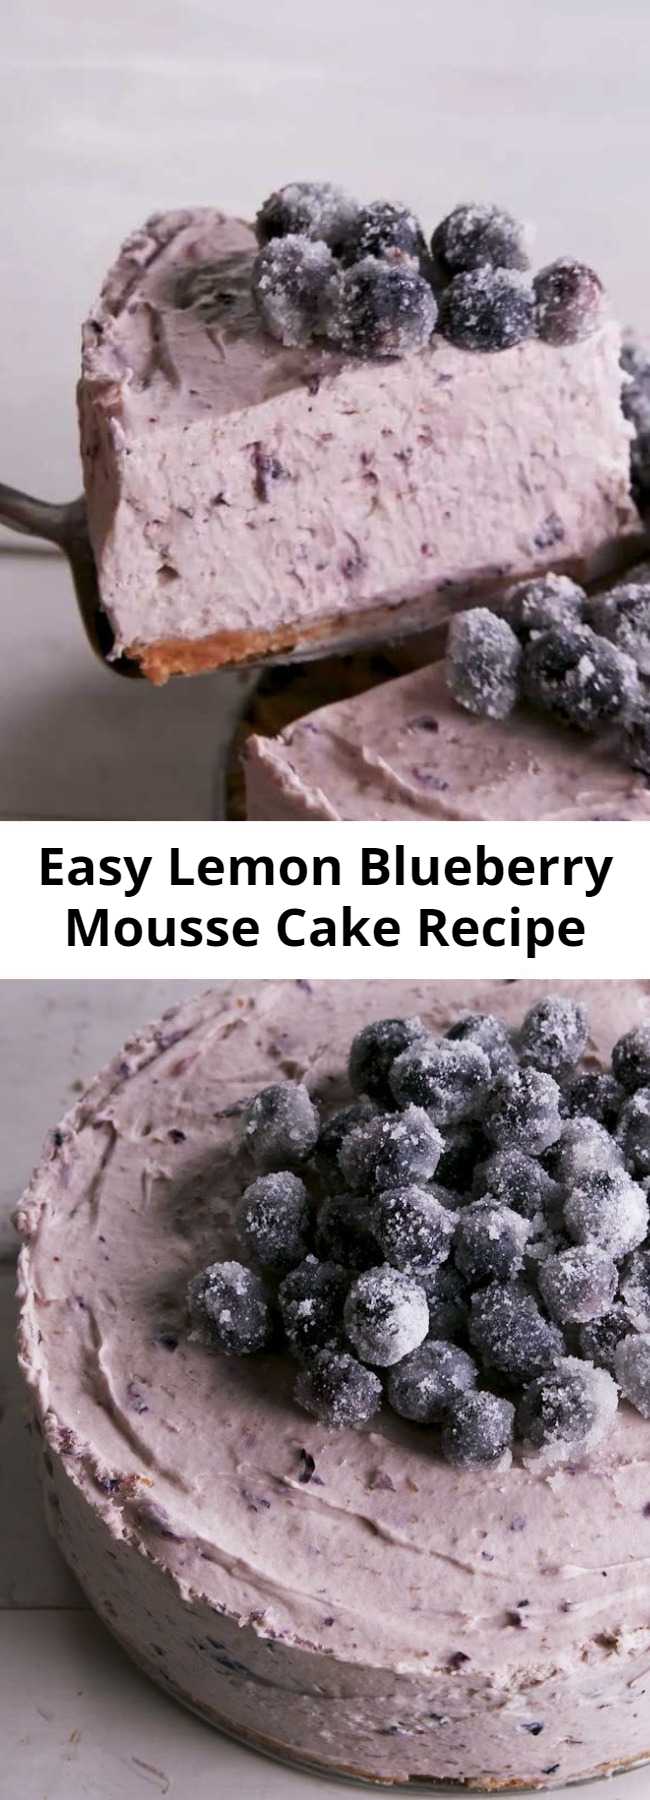 Easy Lemon Blueberry Mousse Cake Recipe - When life gives you lemons, don't make lemonade. his lemon blueberry mousse cake is the spring showstopper you've been looking for. #easy #recipe #lemon #blueberry #mousse #Moussecake #baking